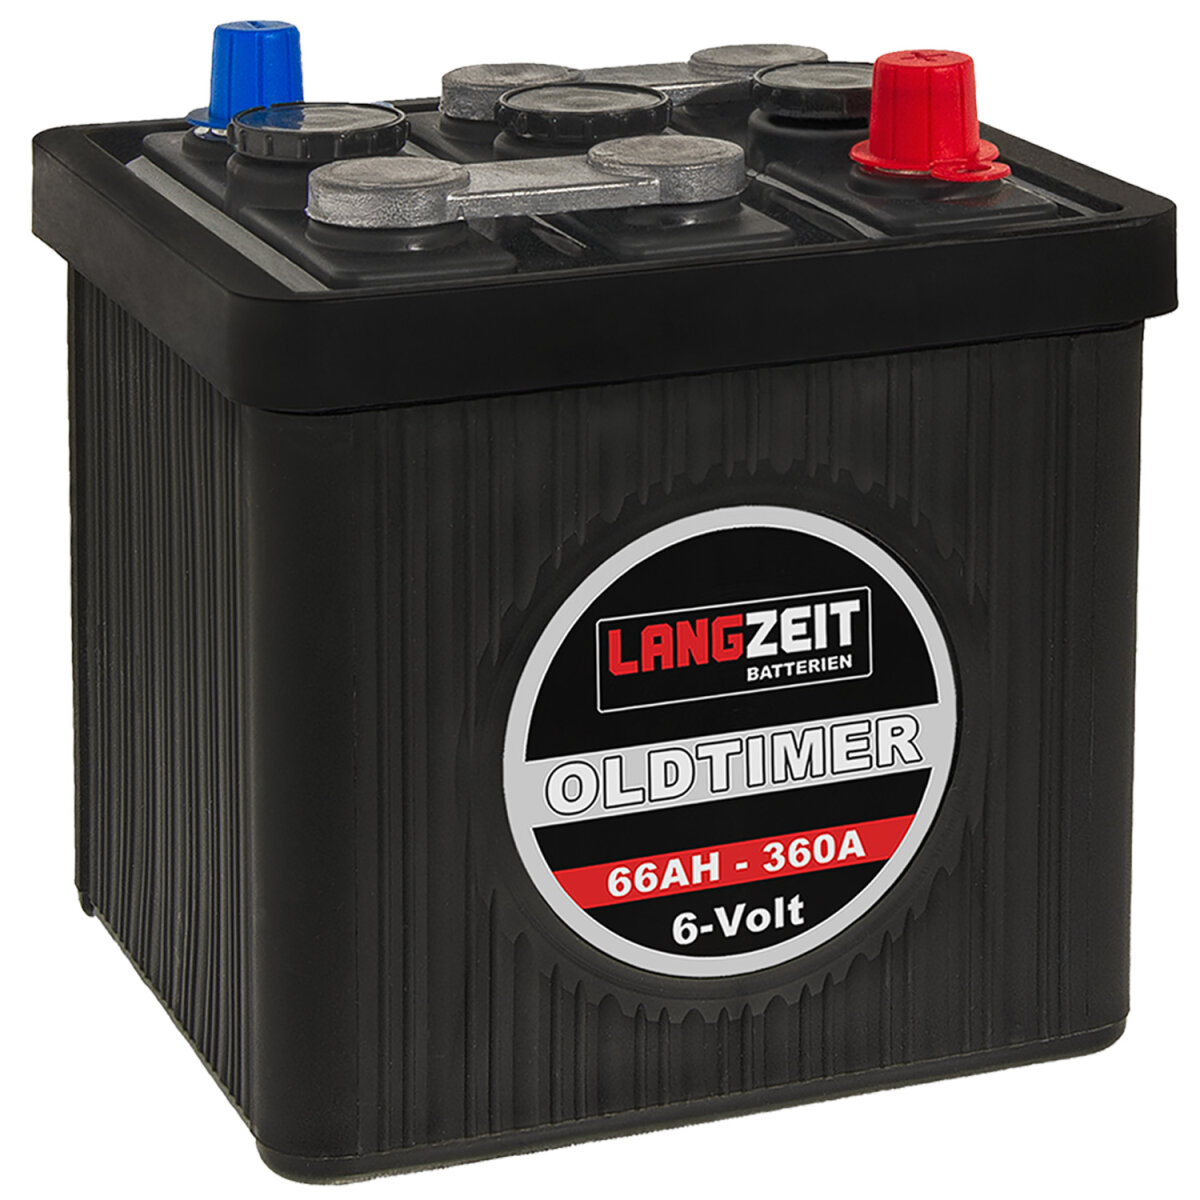 https://www.winnerbatterien.de/media/image/product/4073/lg/langzeit-oldtimer-autobatterie-66ah-6v.jpg